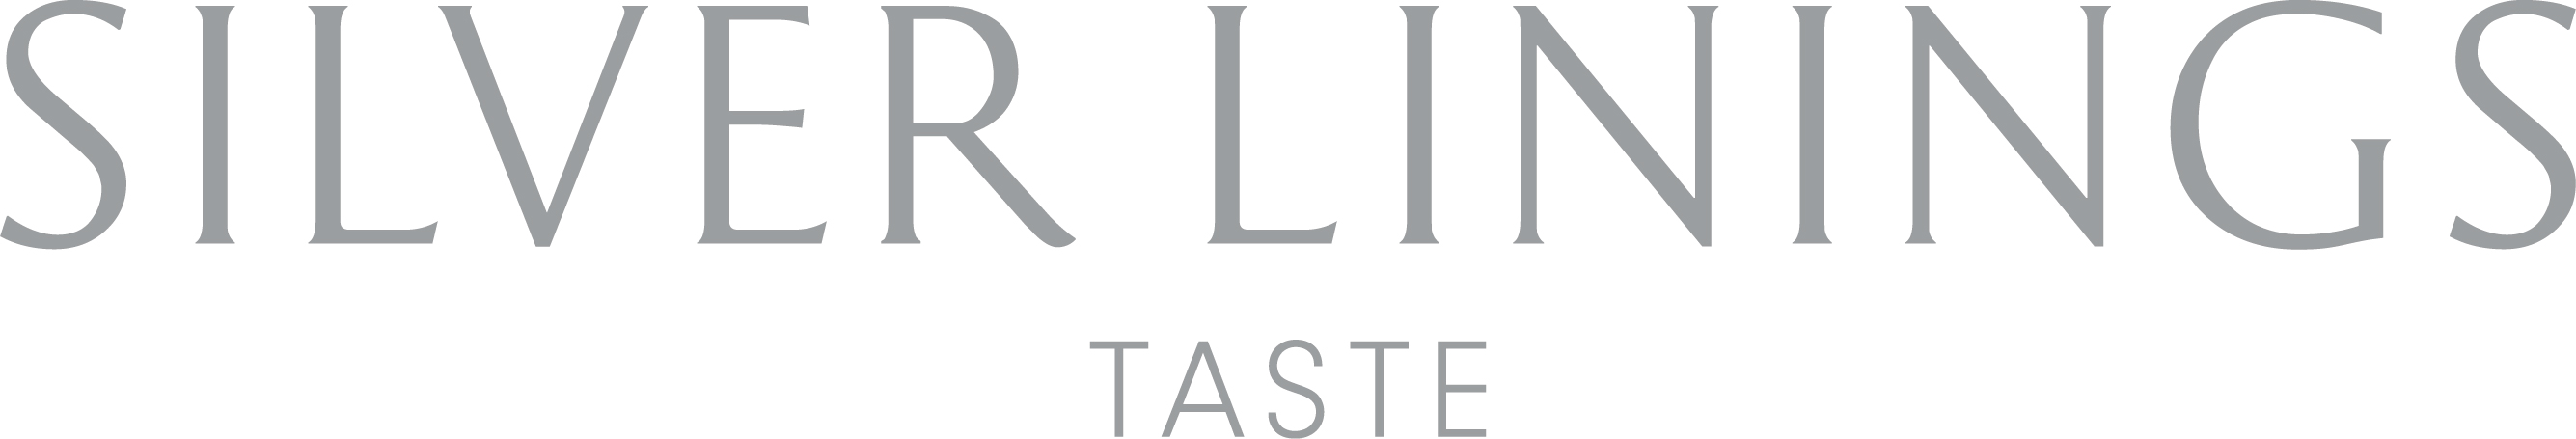 Silver Linings Taste logo